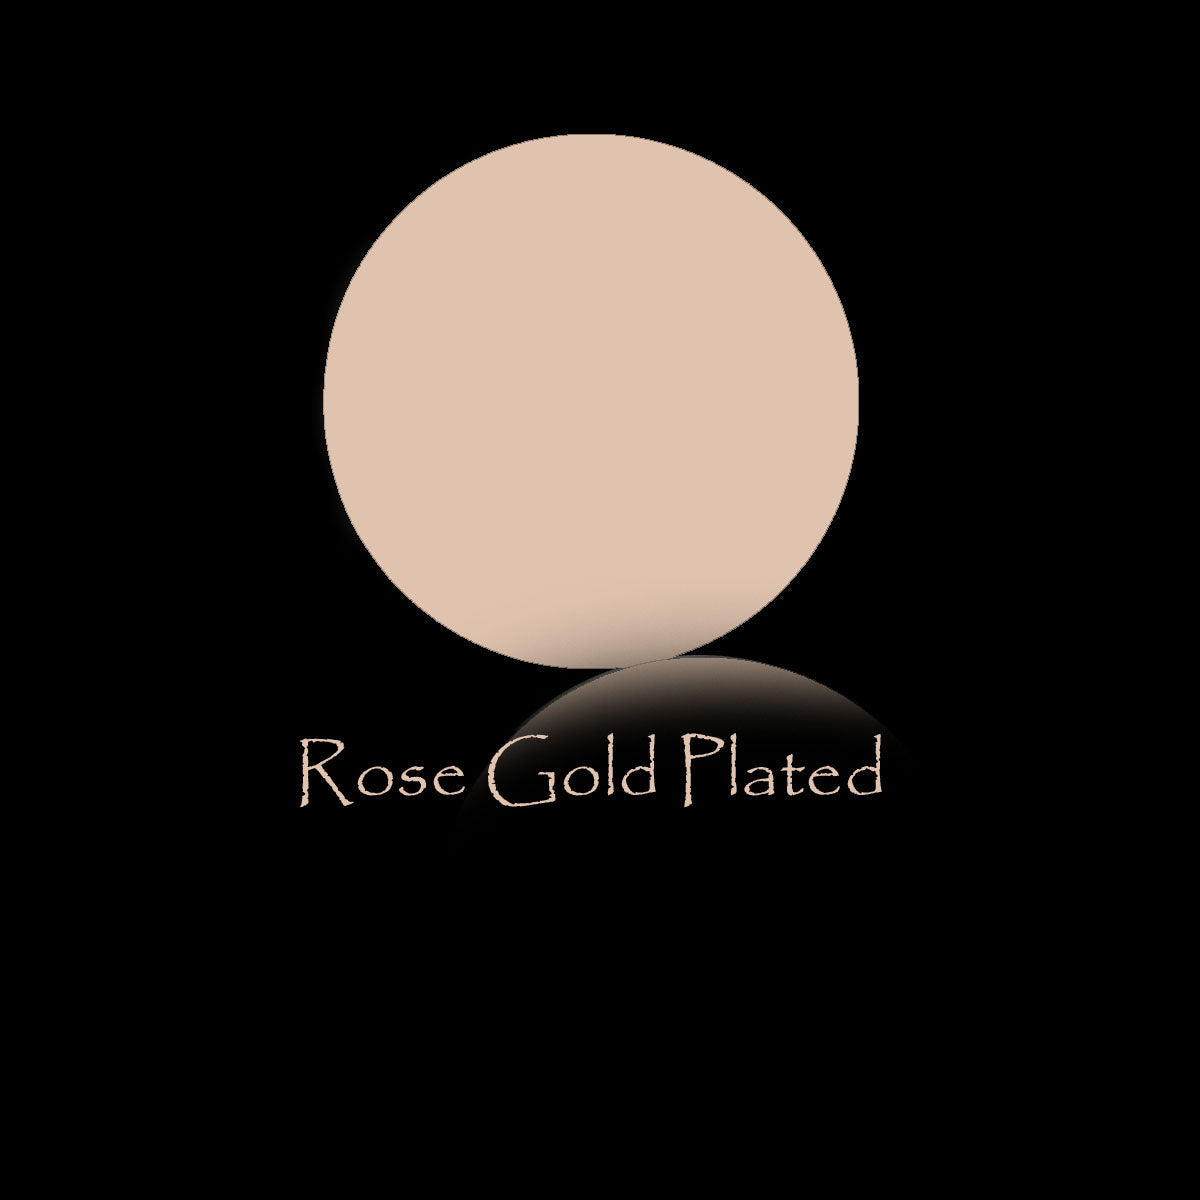 Gold plated Handmade Goddess Face Design Drop and Dangle Earring SKU7484